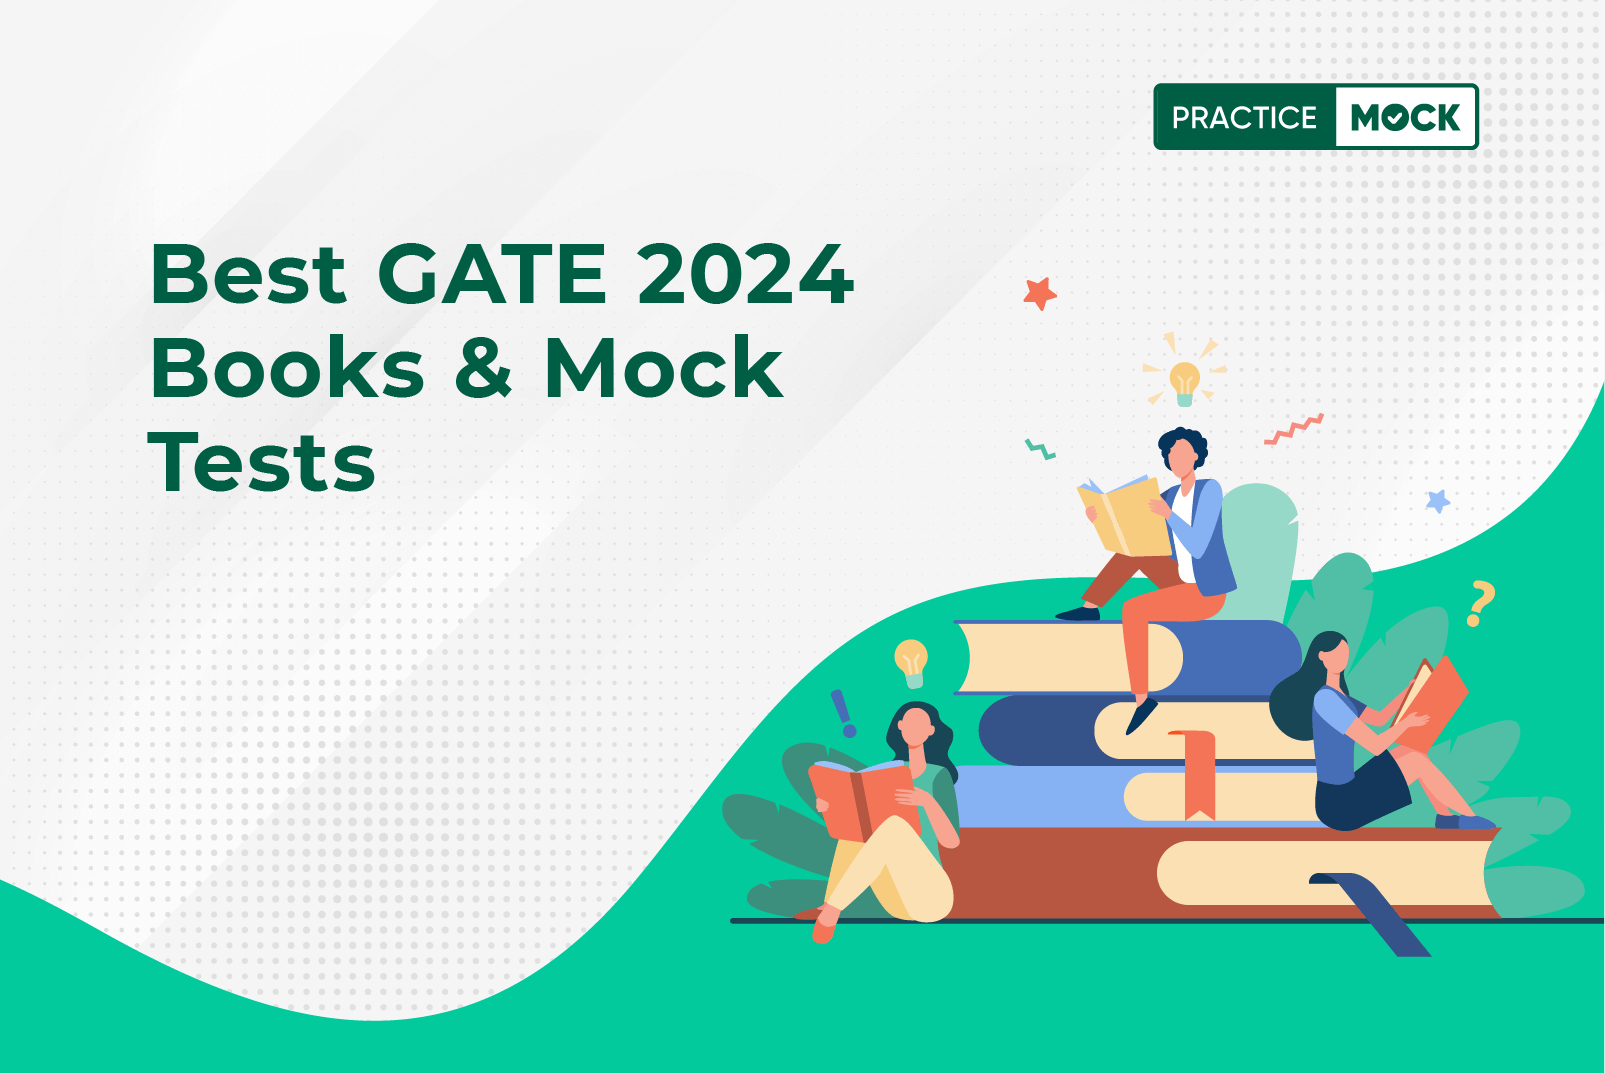 Best GATE 2024 Books & Mock Tests PracticeMock